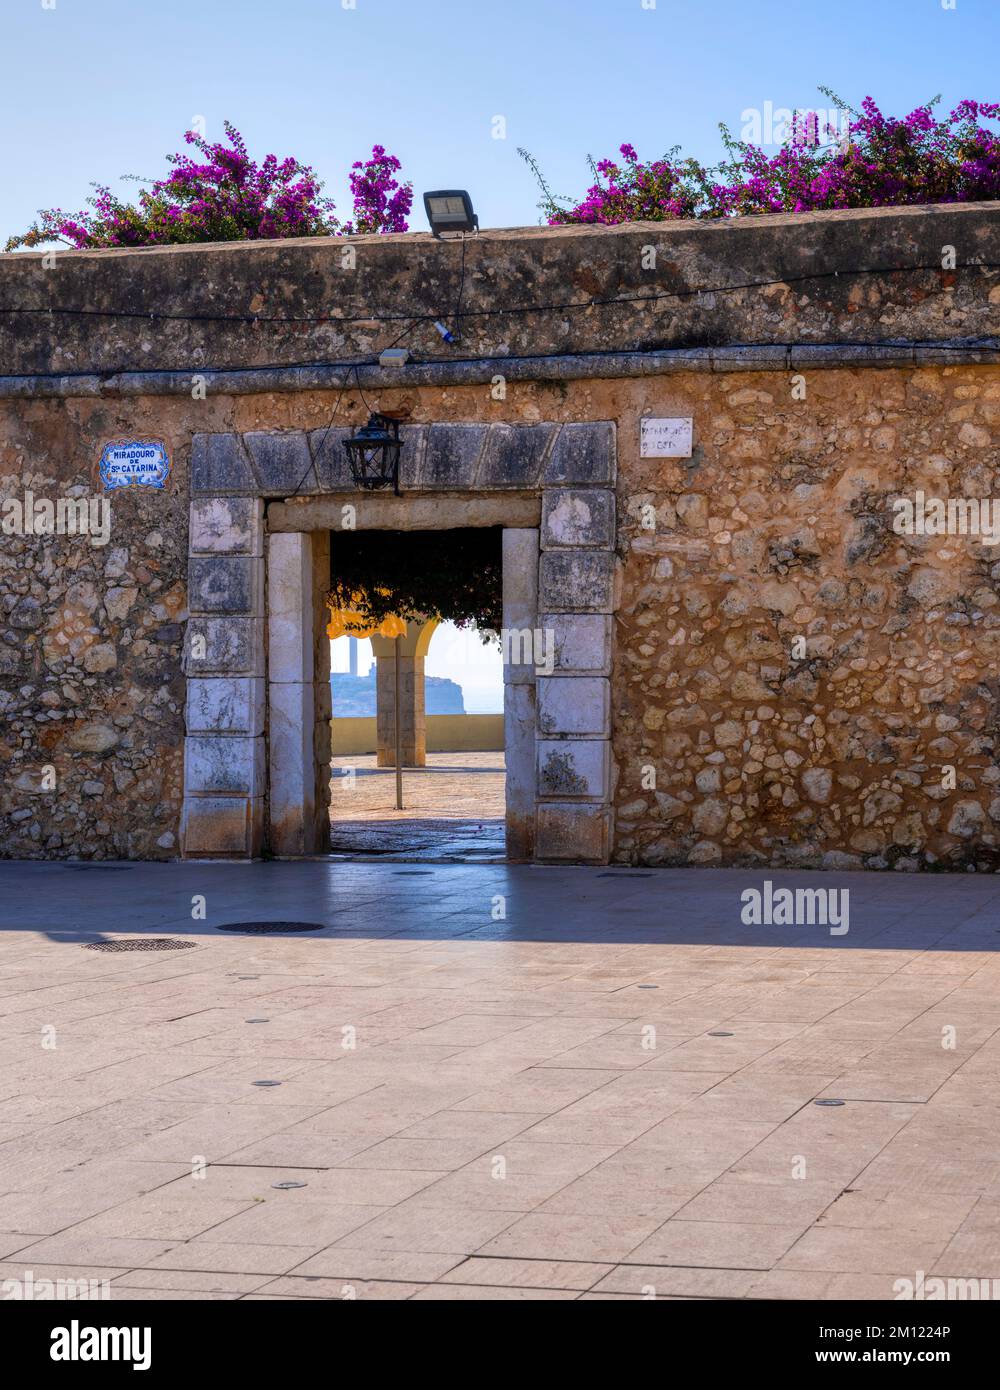 Fortaleza Santa Caterina, Praia da Rocha, Portimao, Algarve, Portugal, Europe Banque D'Images